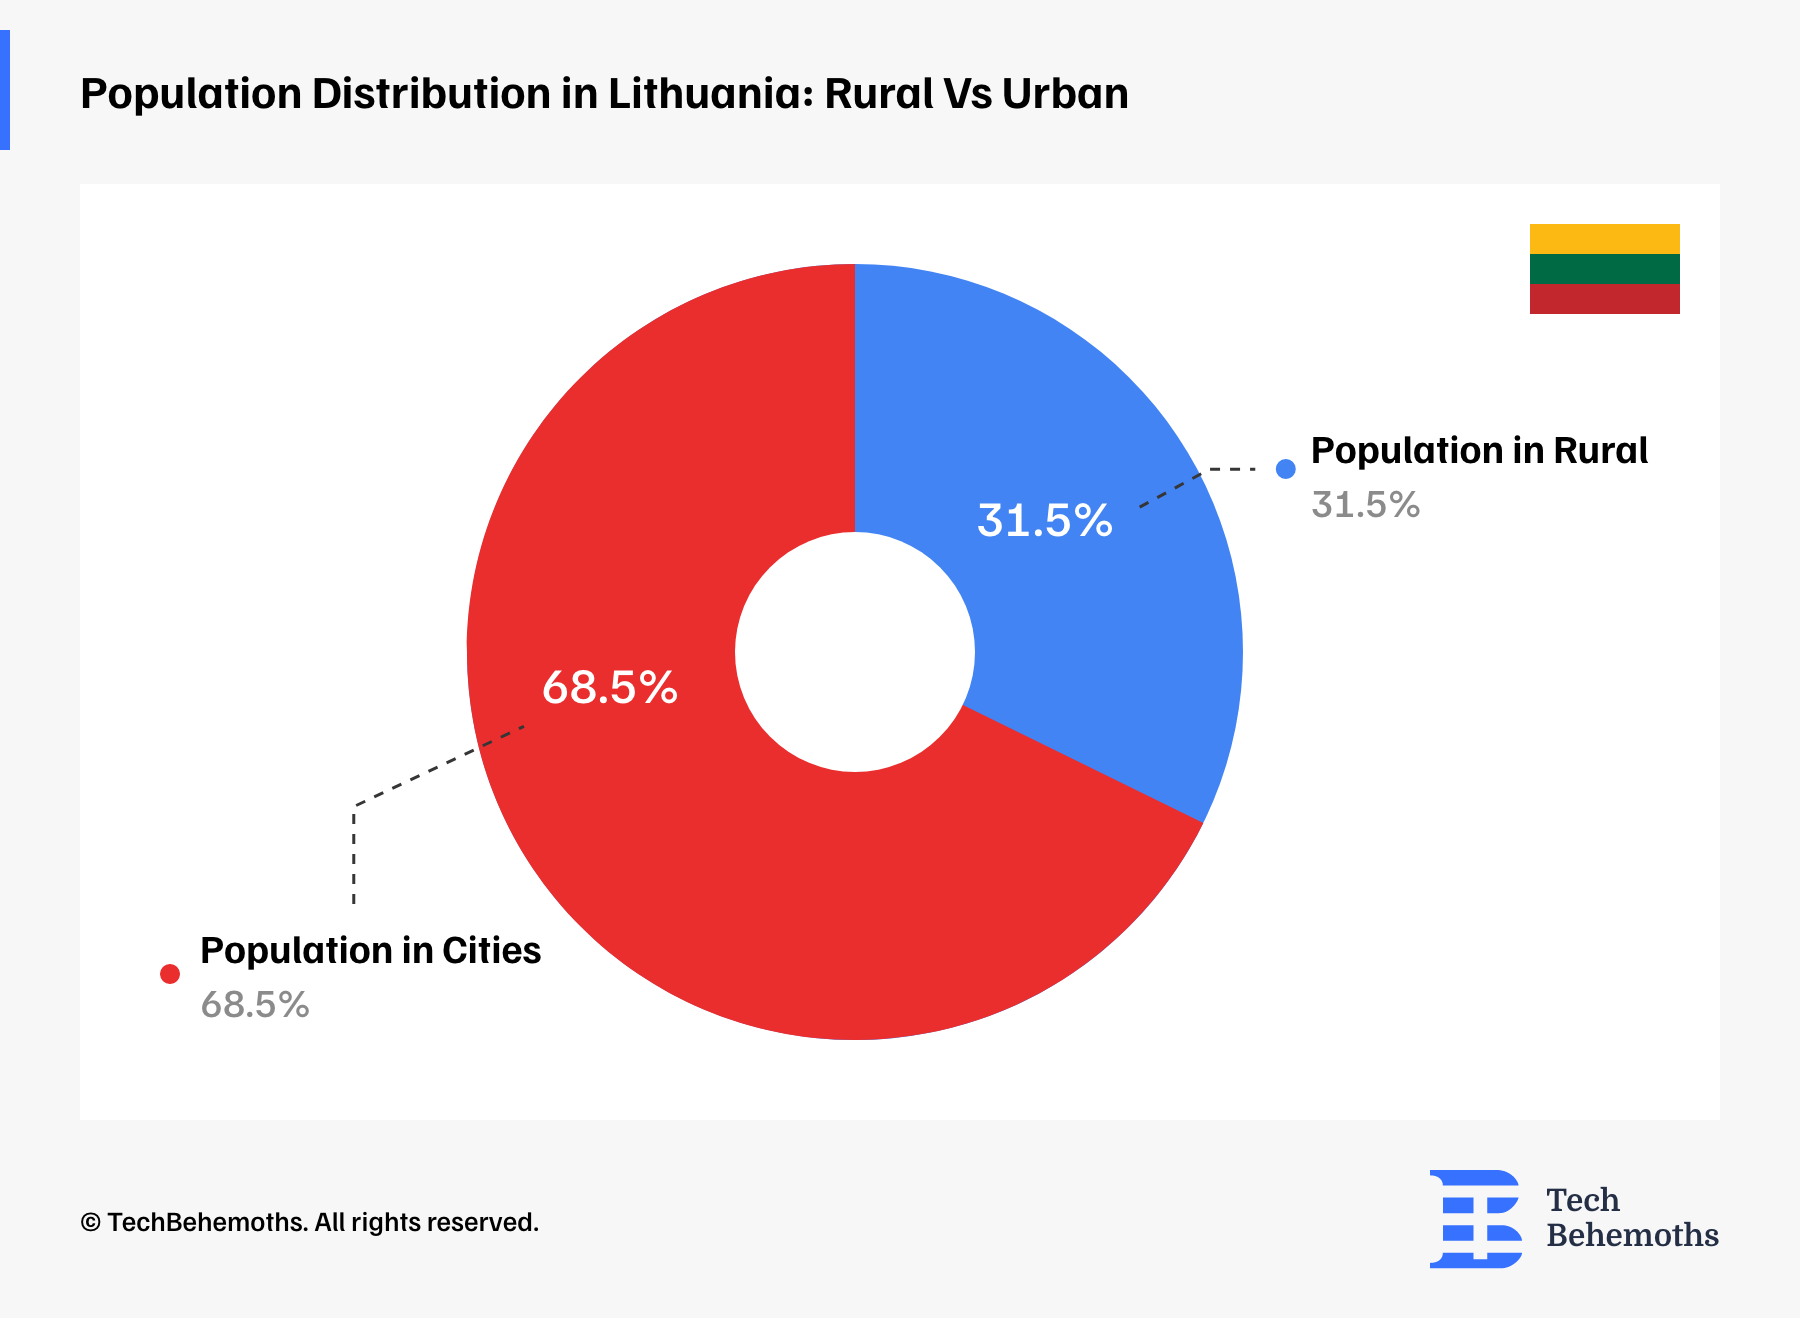 Lithuanian Population Distribution: Rural Vs Urban